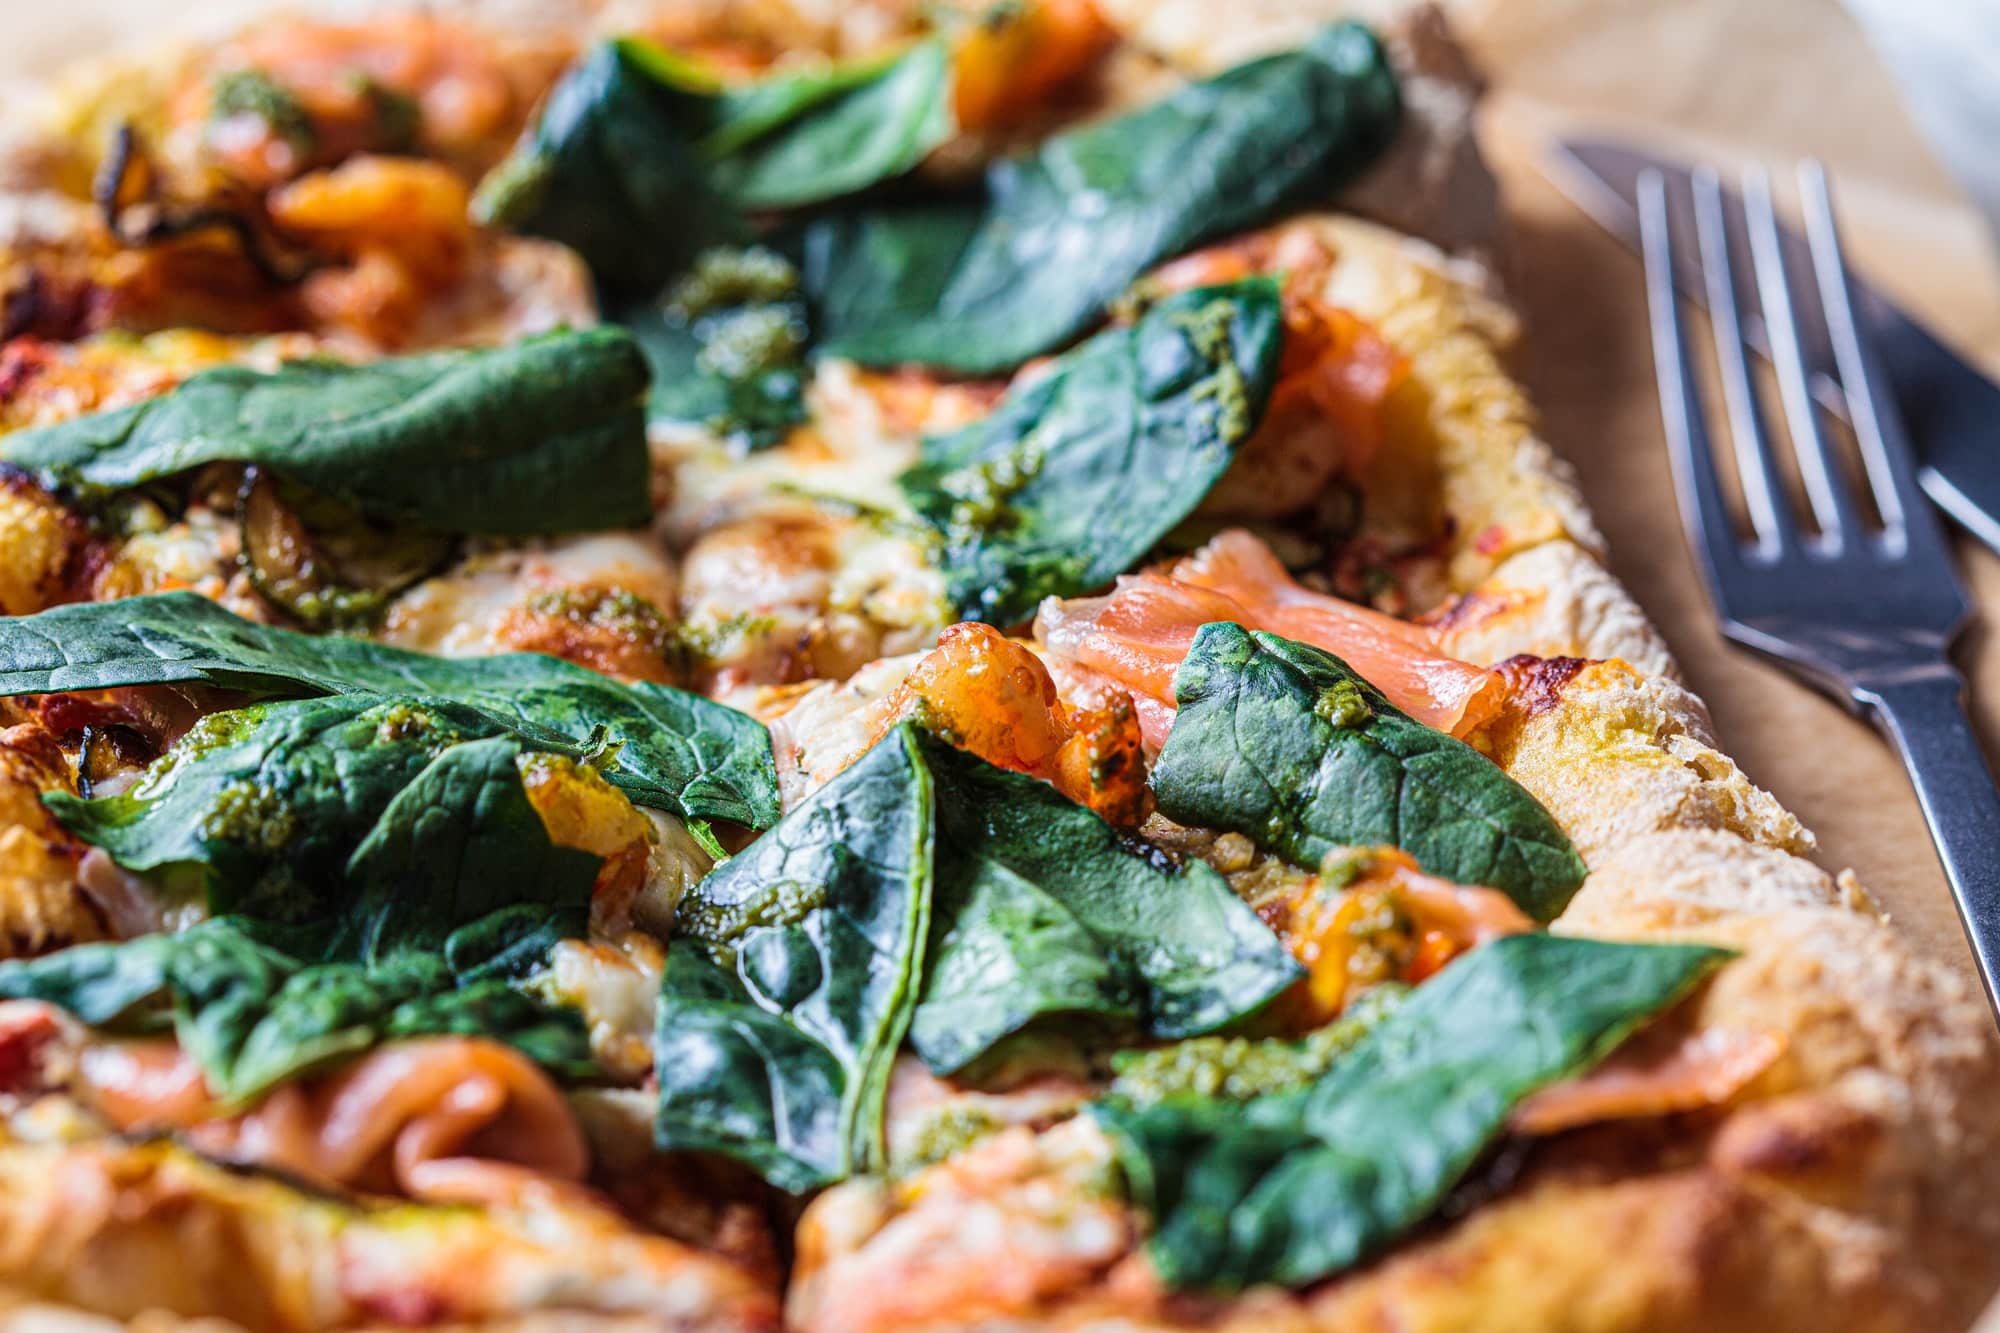 Homemade pizza with salmon, pesto and shrimps. Comfort food theme.